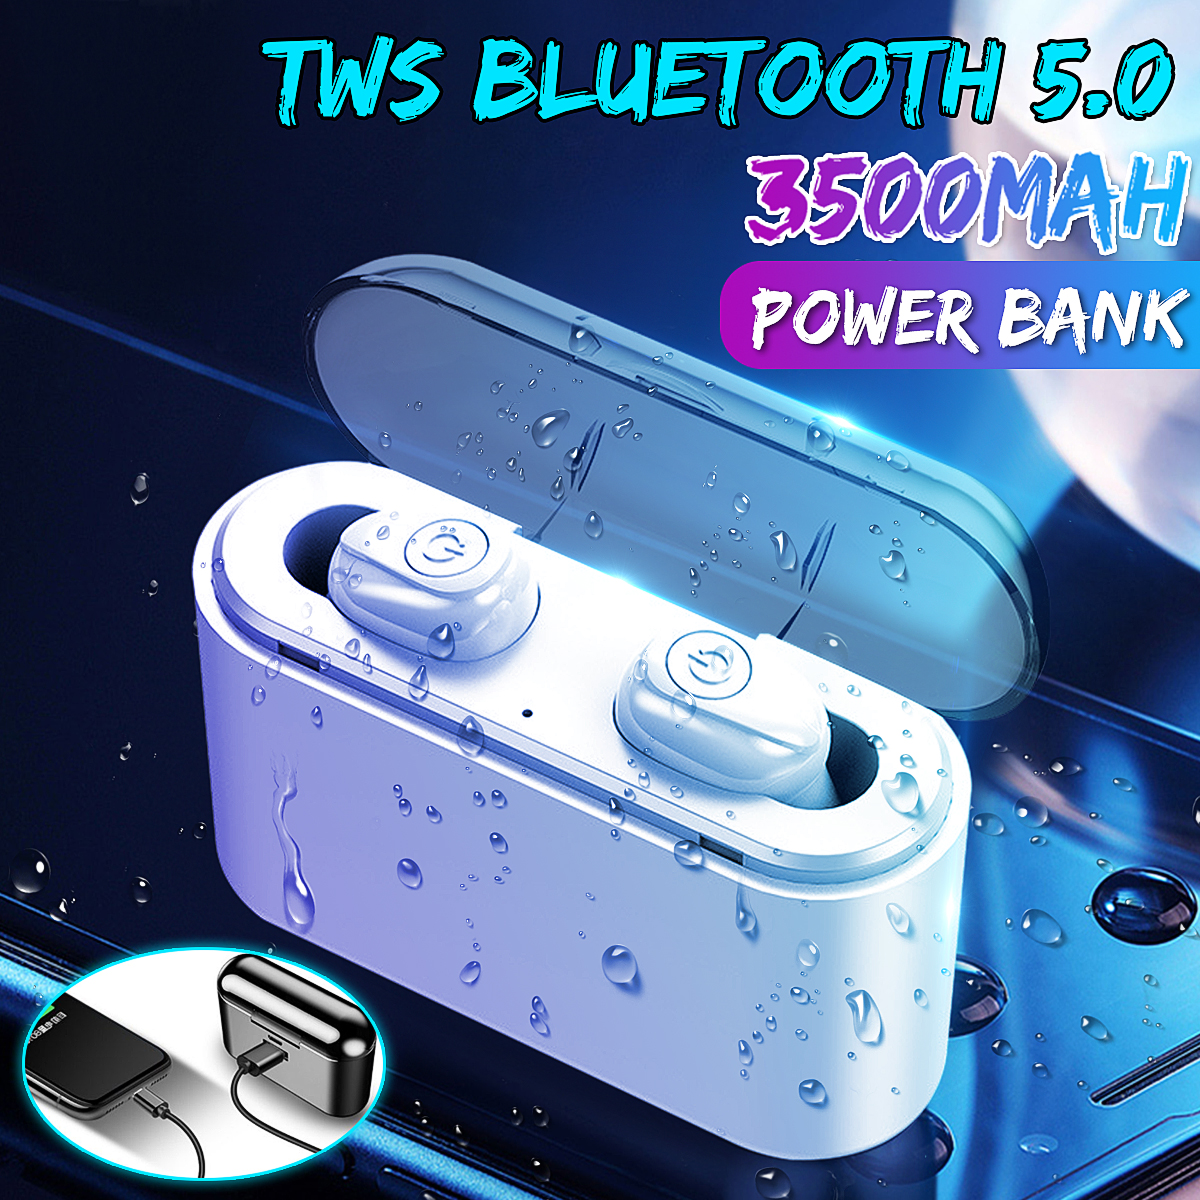 bluetooth-50-TWS-Earphone-CVC80-Noise-Cancelling-3500mAh-Power-Bank-Stereo-Sport-Headphone-with-Mic-1443669-1